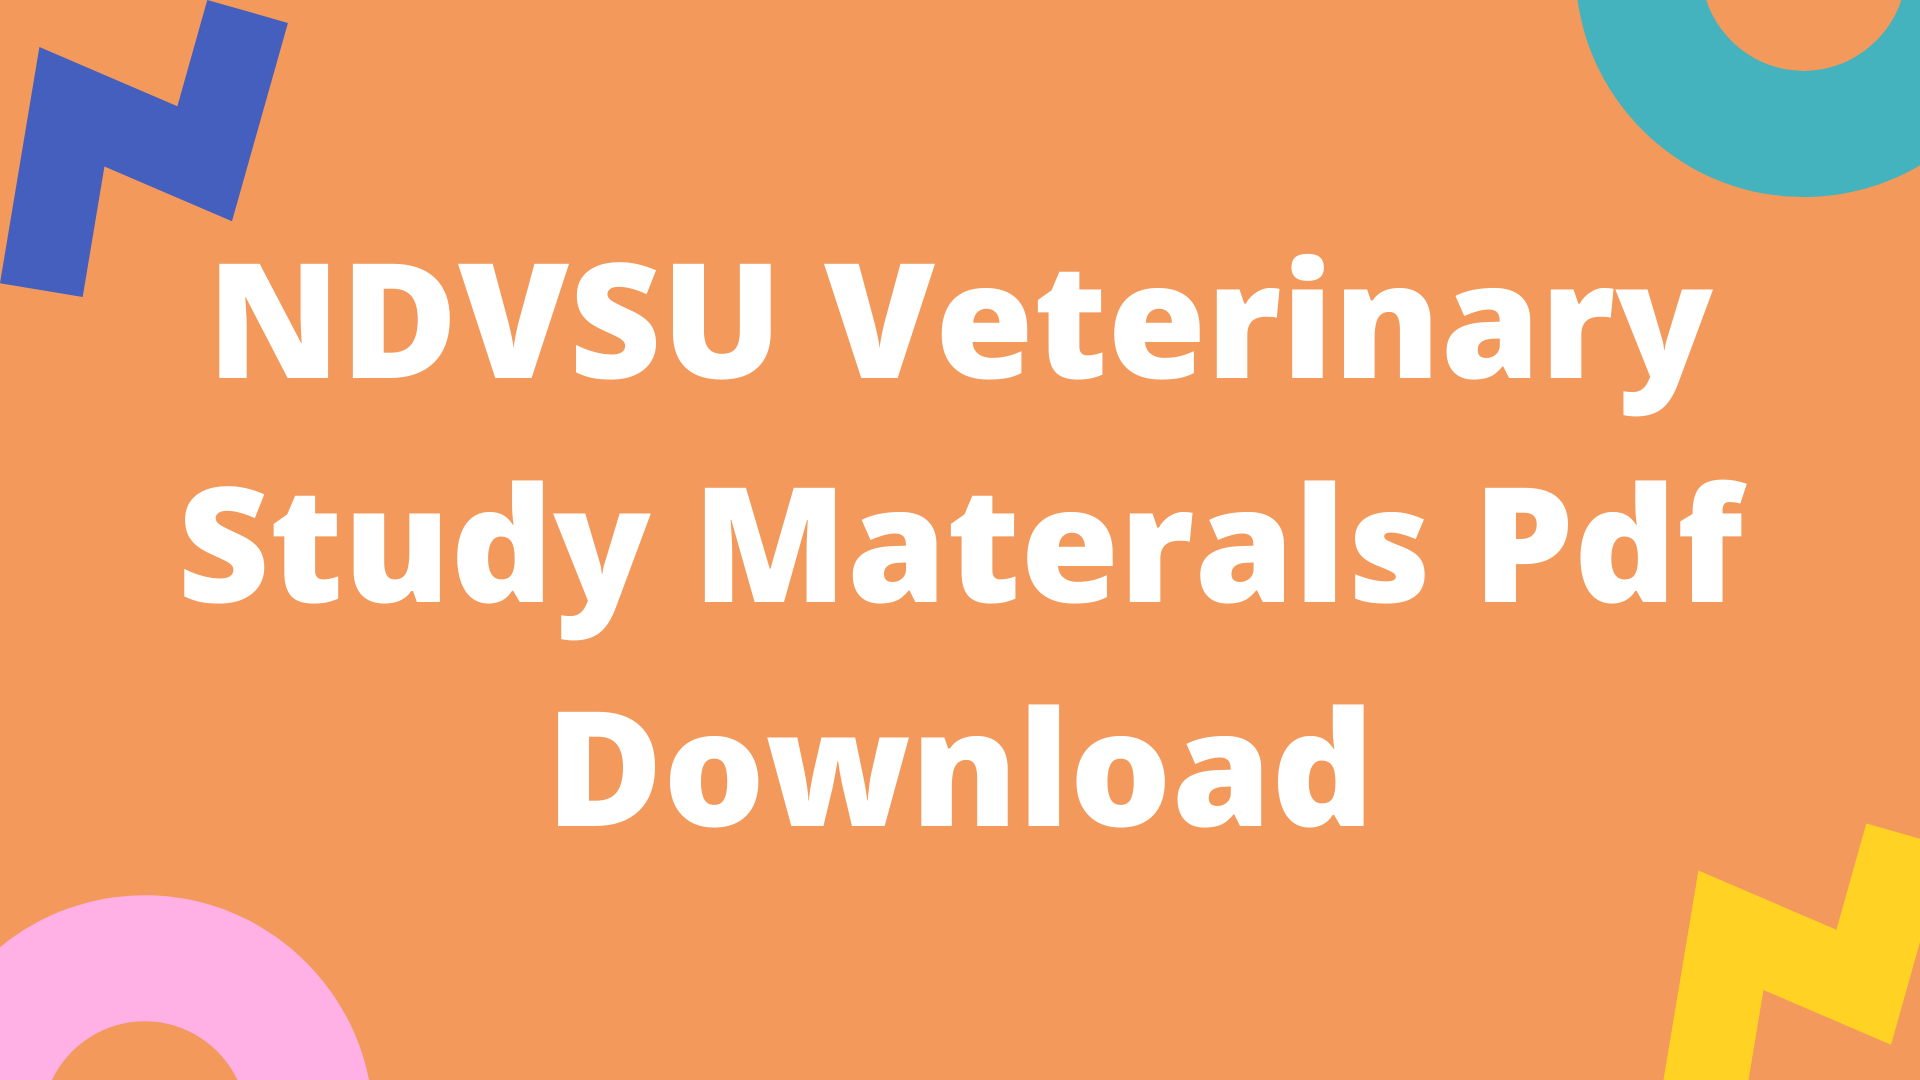 NDVSU Veterinary Study Materals Pdf Download • NDVSU Veterinary Study Materals Pdf Download